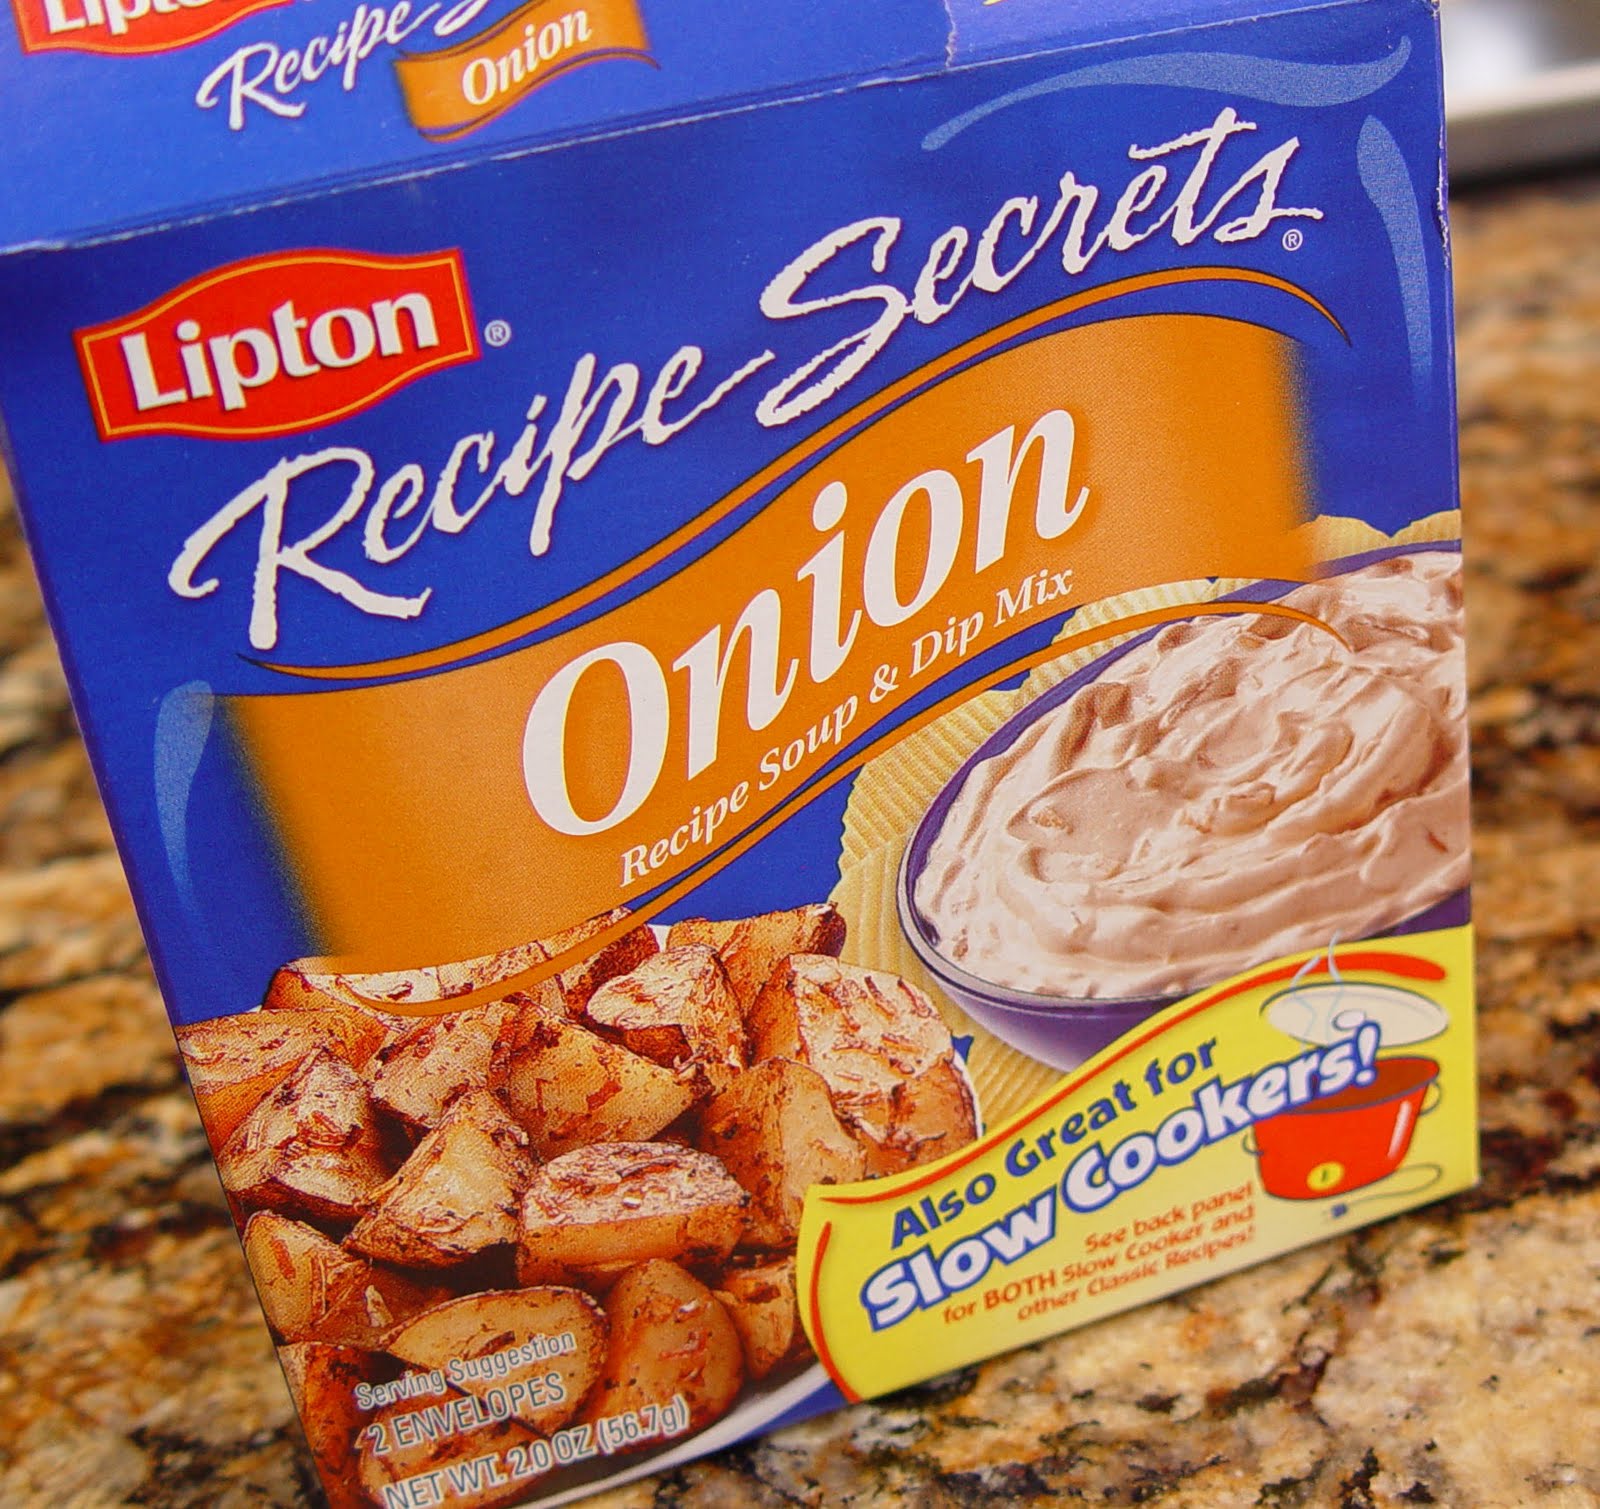 What is Lipton soup mix?